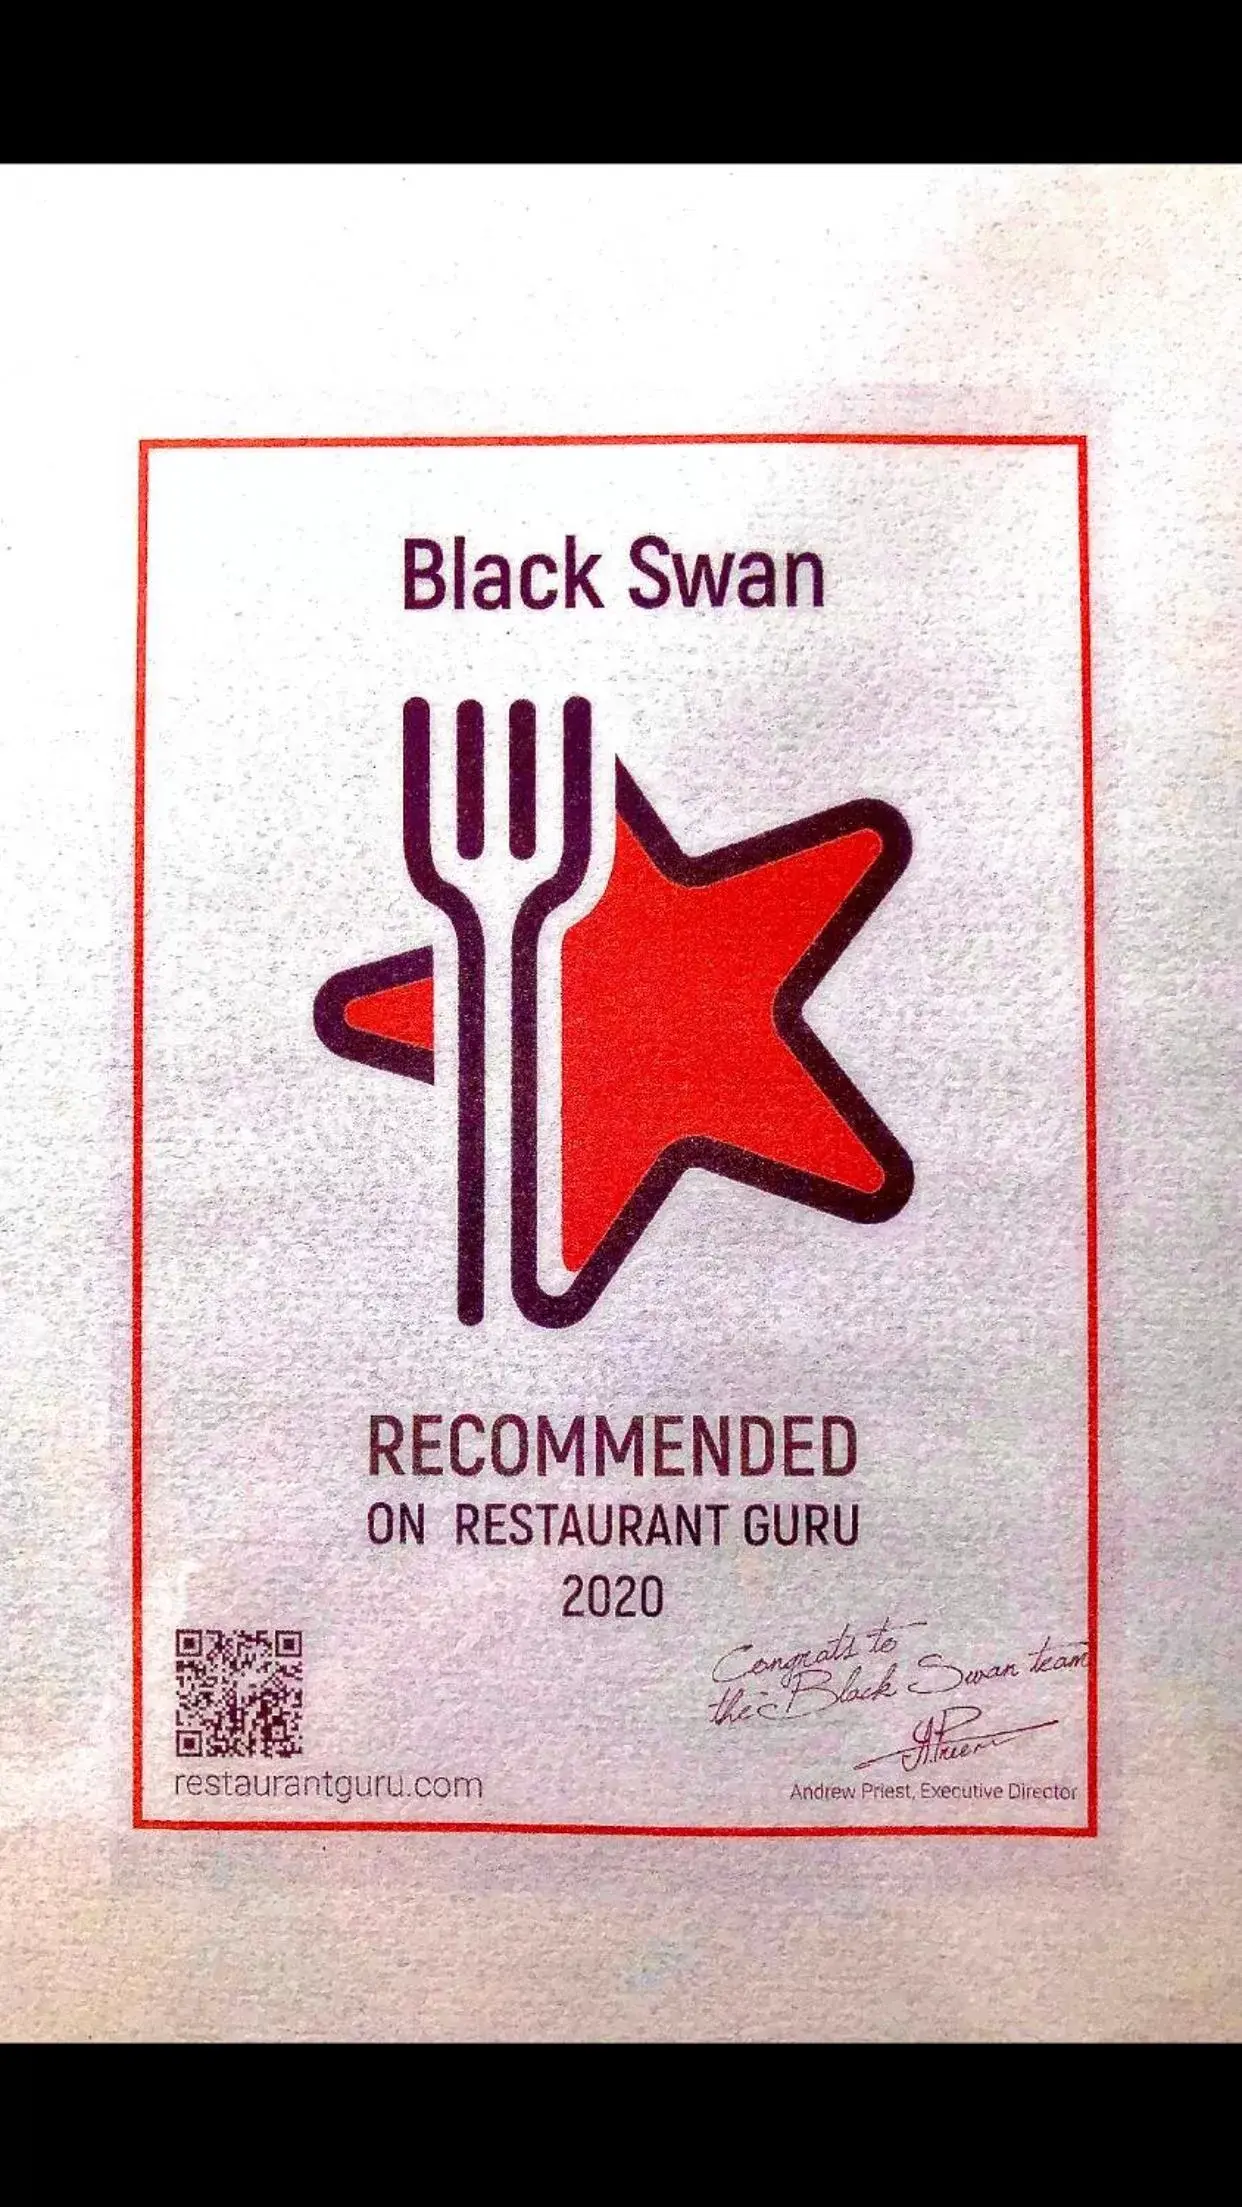 The Black Swan Hotel